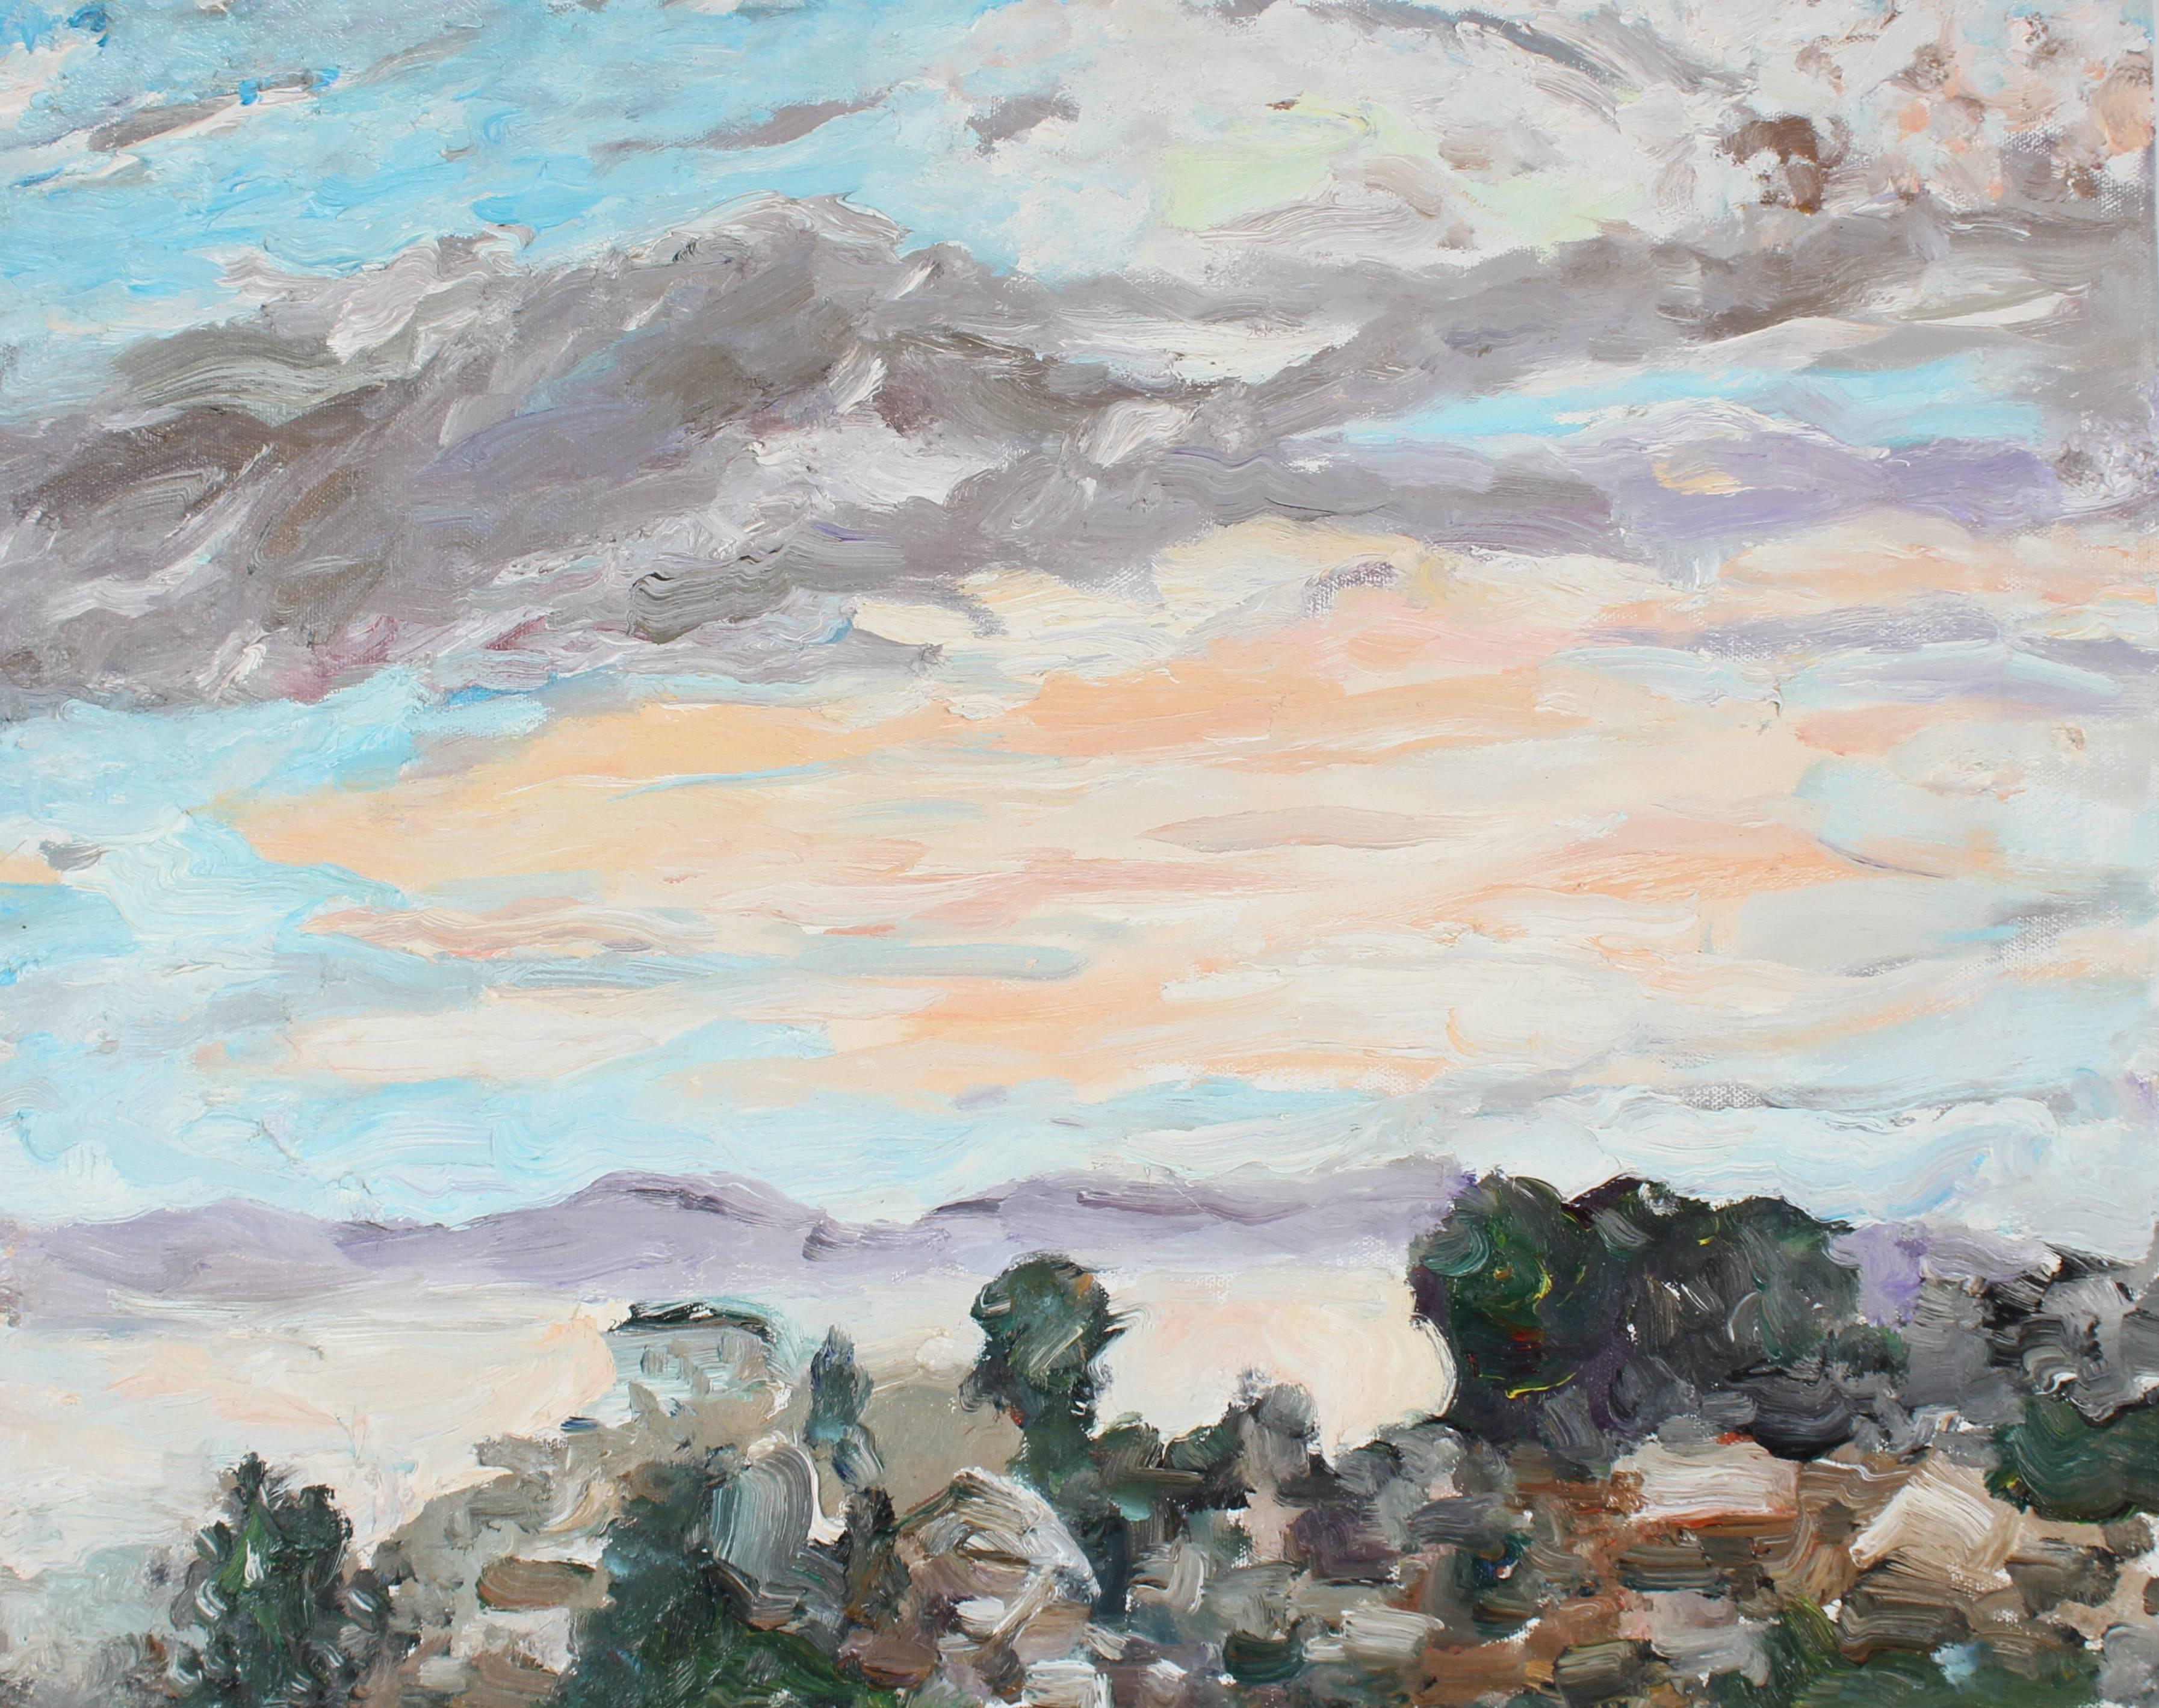 Jack Freeman Landscape Painting - "Sunrise" San Francisco Cityscape